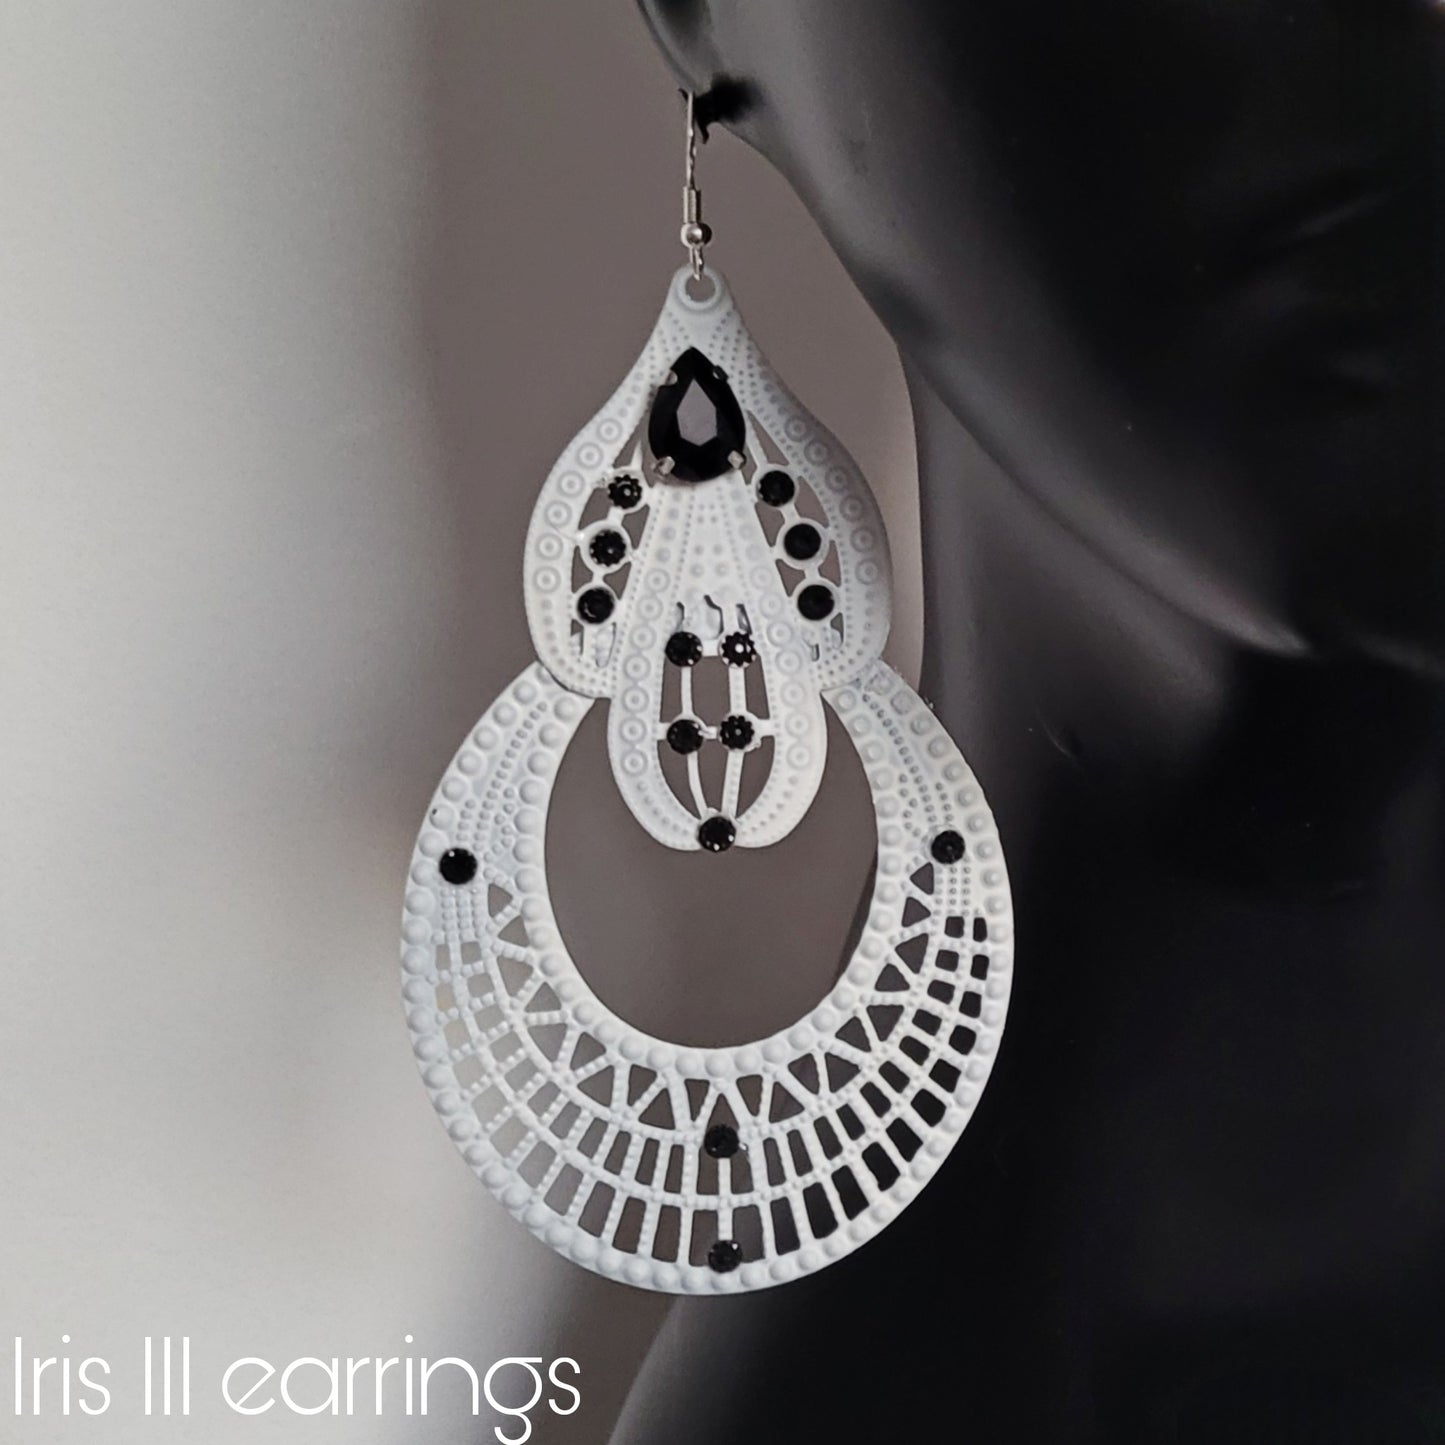 Deusa ex Machina collection: The Iris earrings